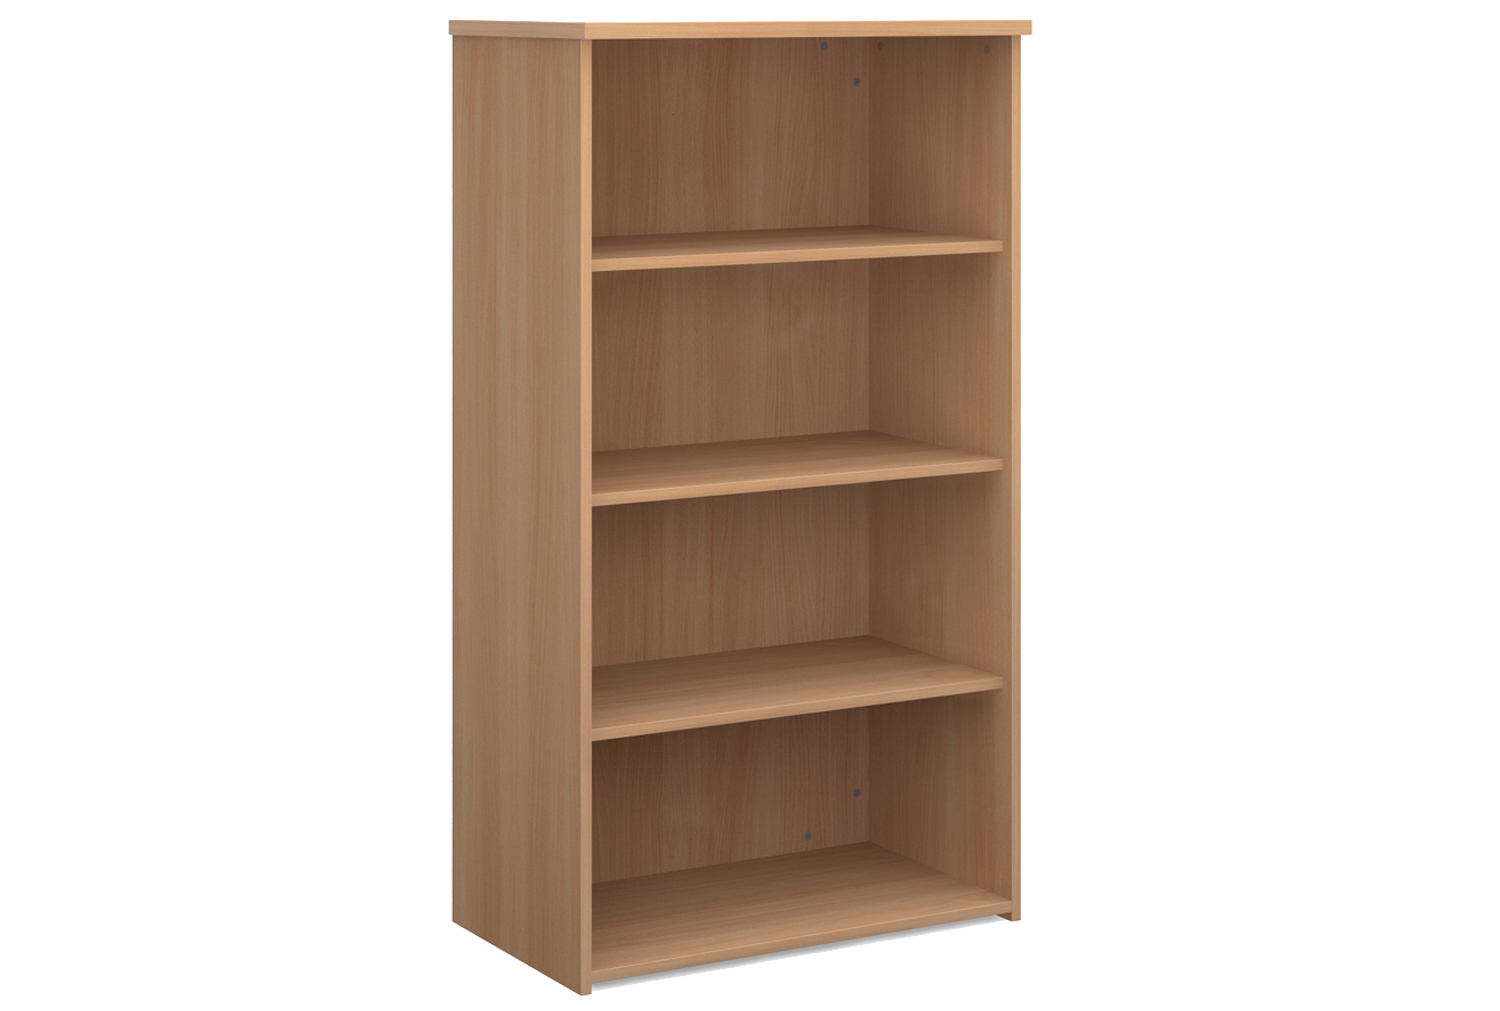 Value Line Office Bookcases, 3 Shelf - 80wx47dx144h (cm), Beech